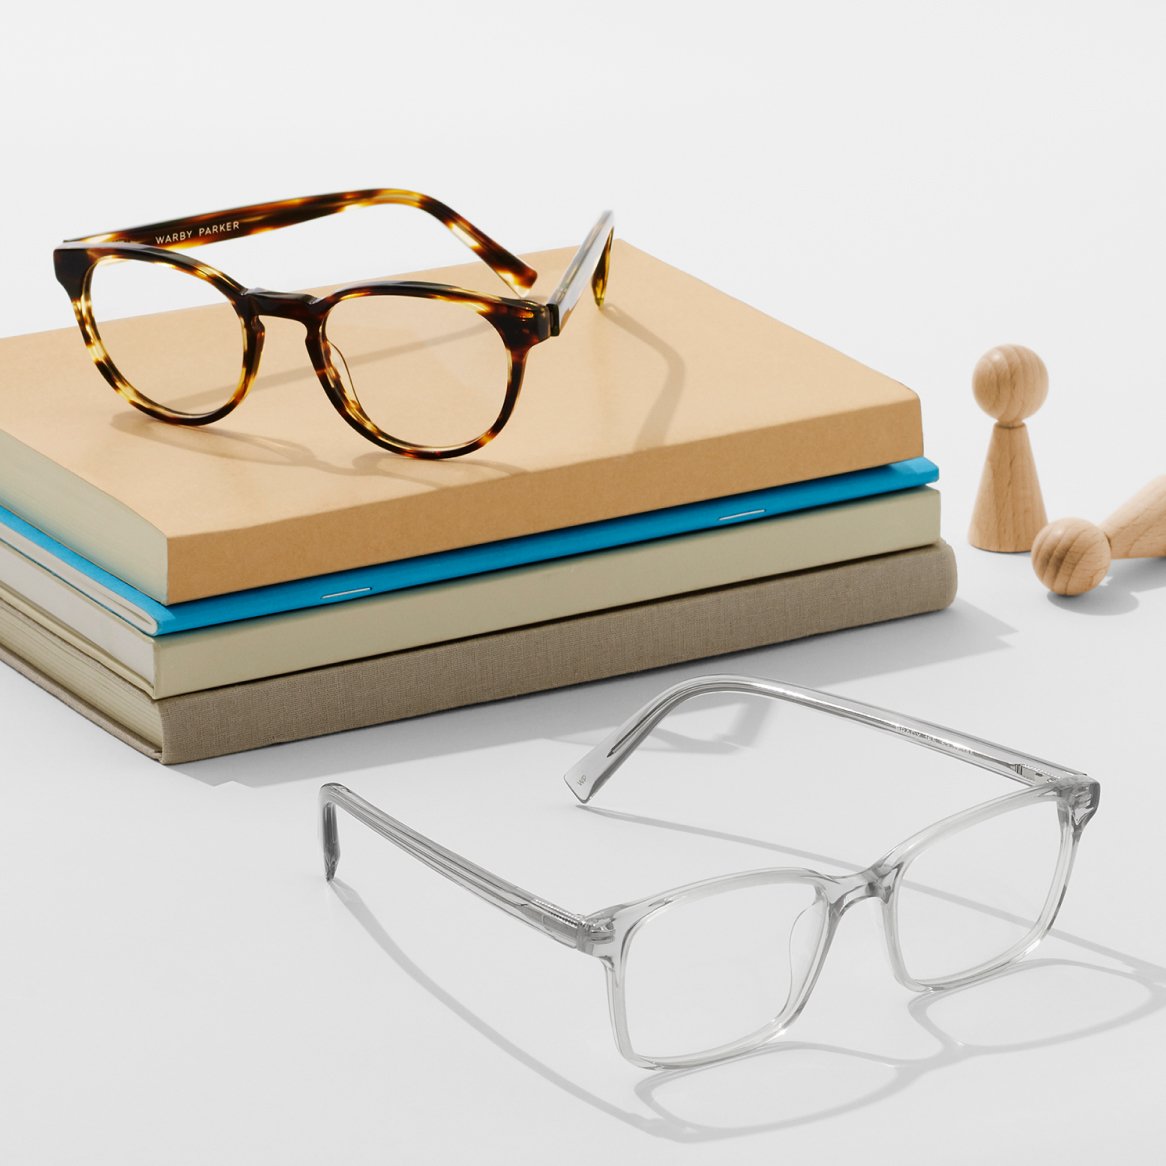 How Should Glasses Fit Warby Parker